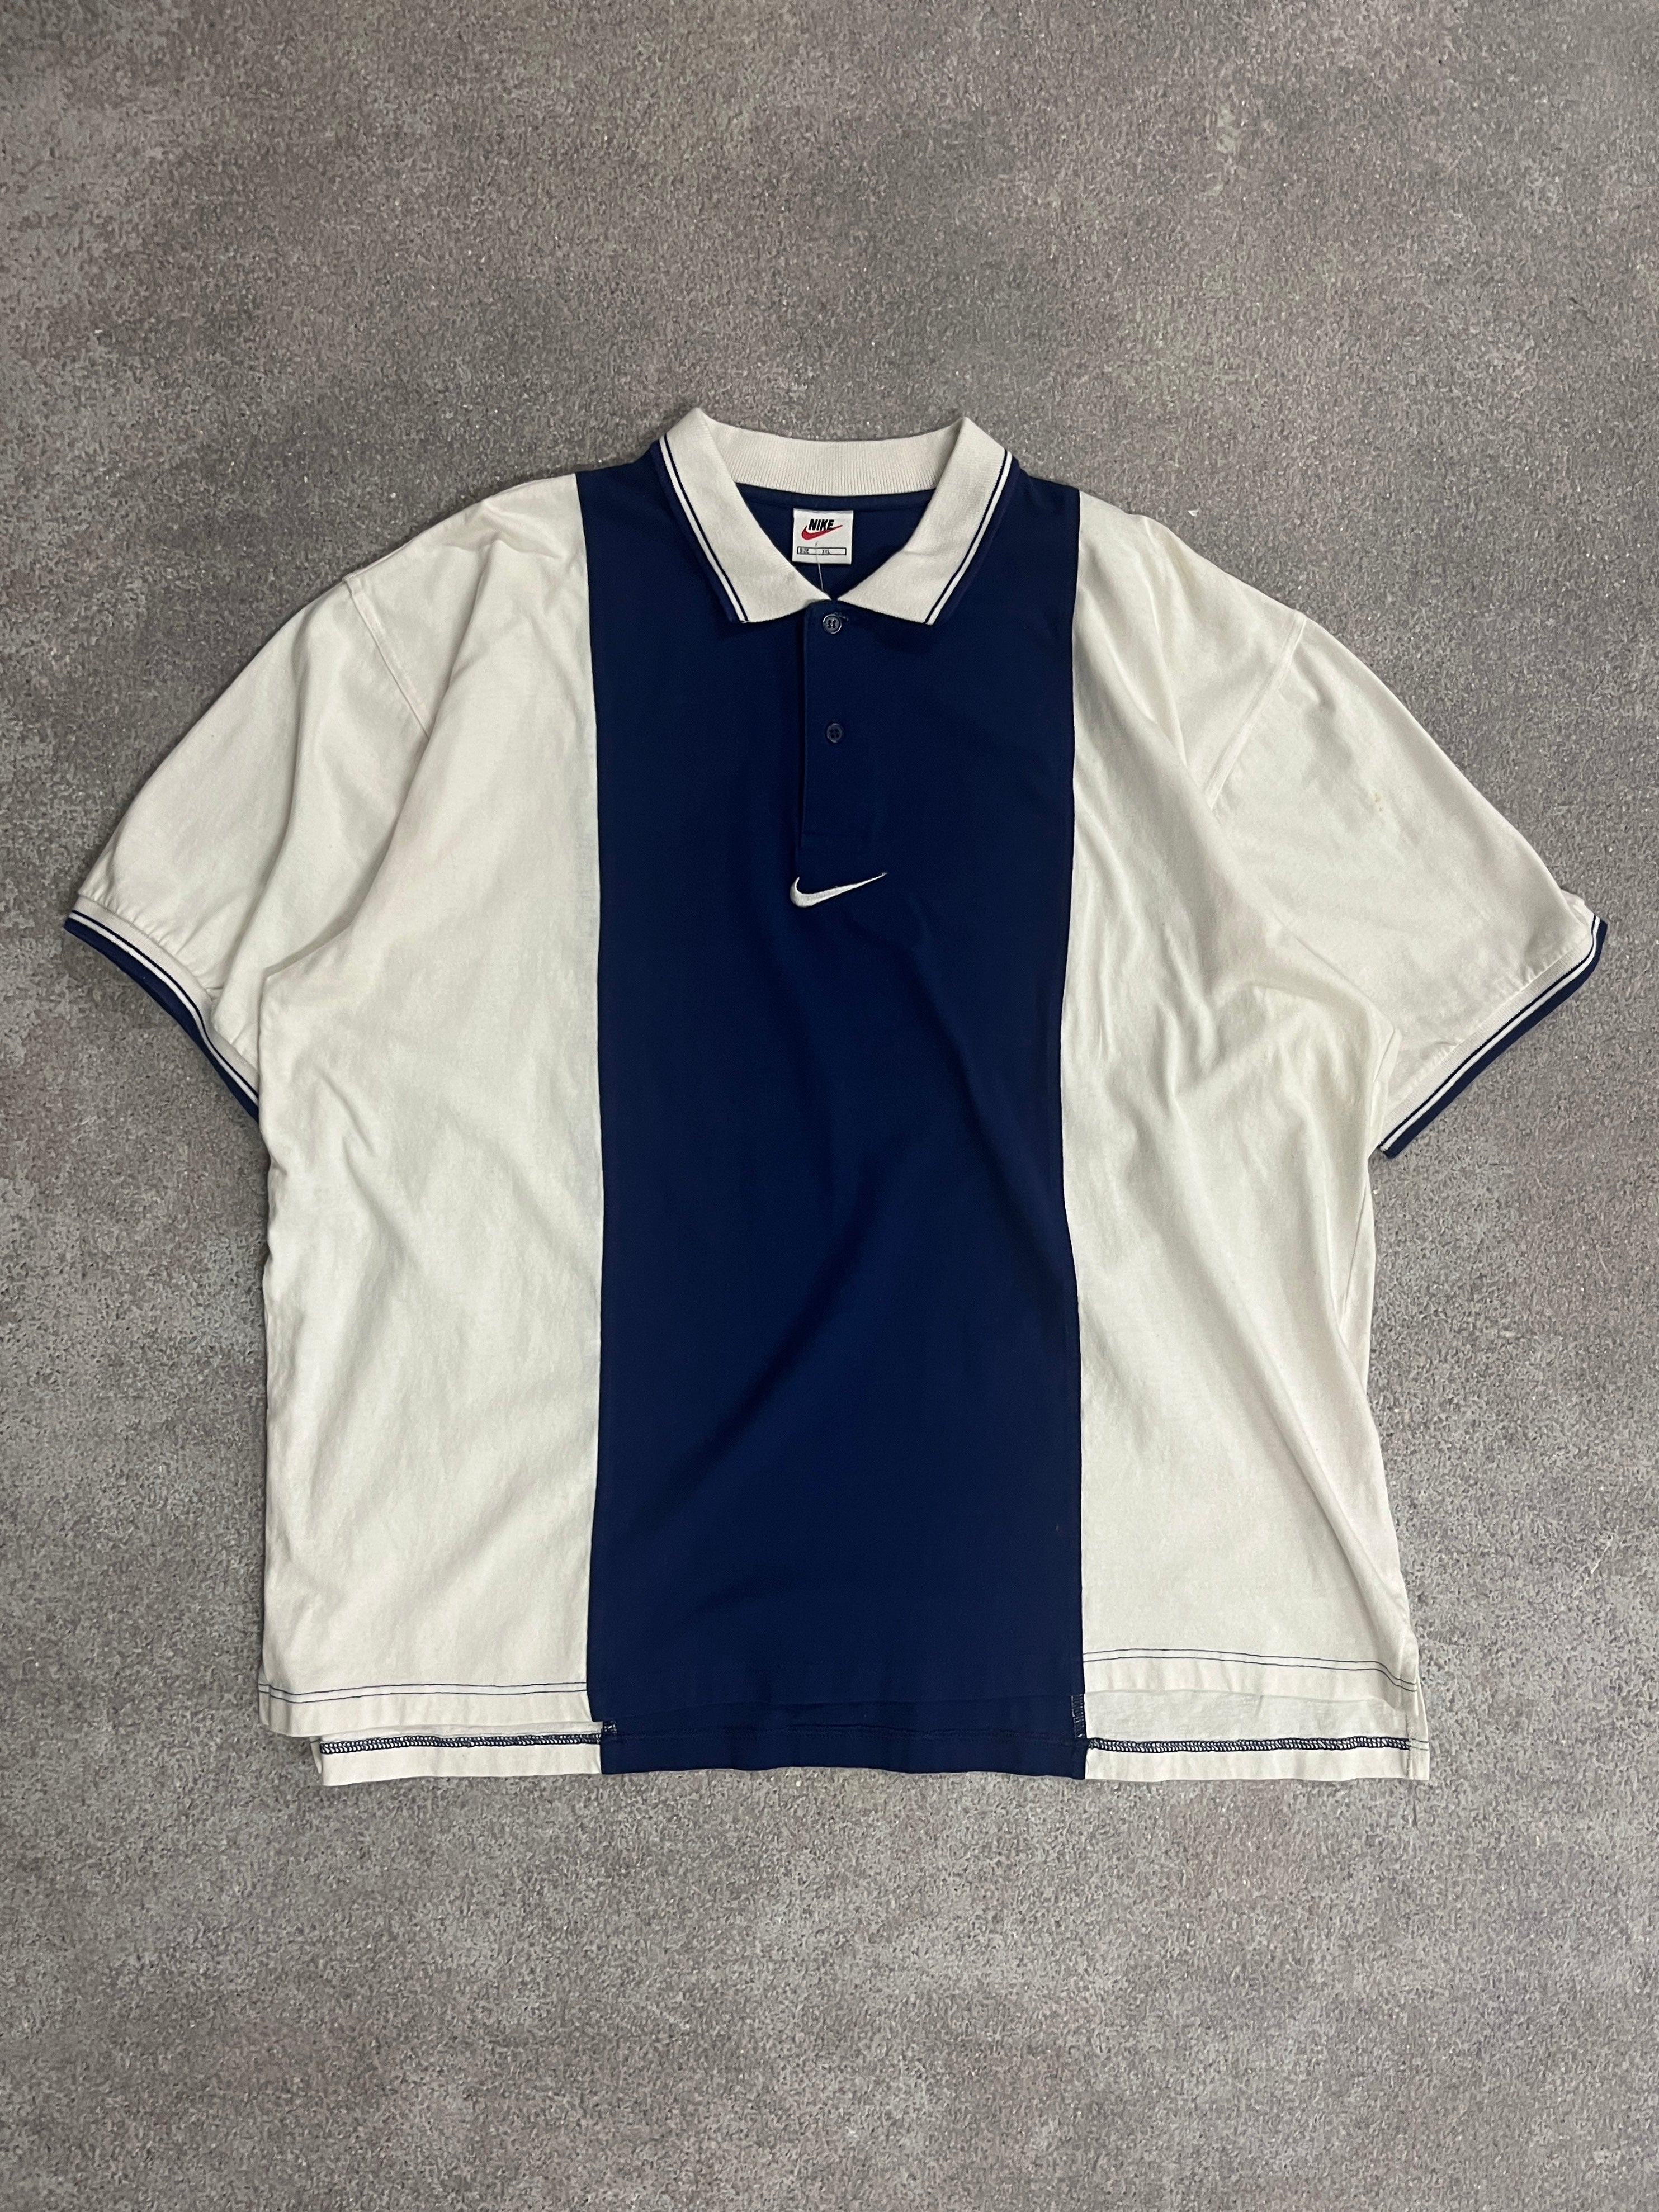 Vintage Nike Jersey TShirt White/Blue // Large - RHAGHOUSE VINTAGE